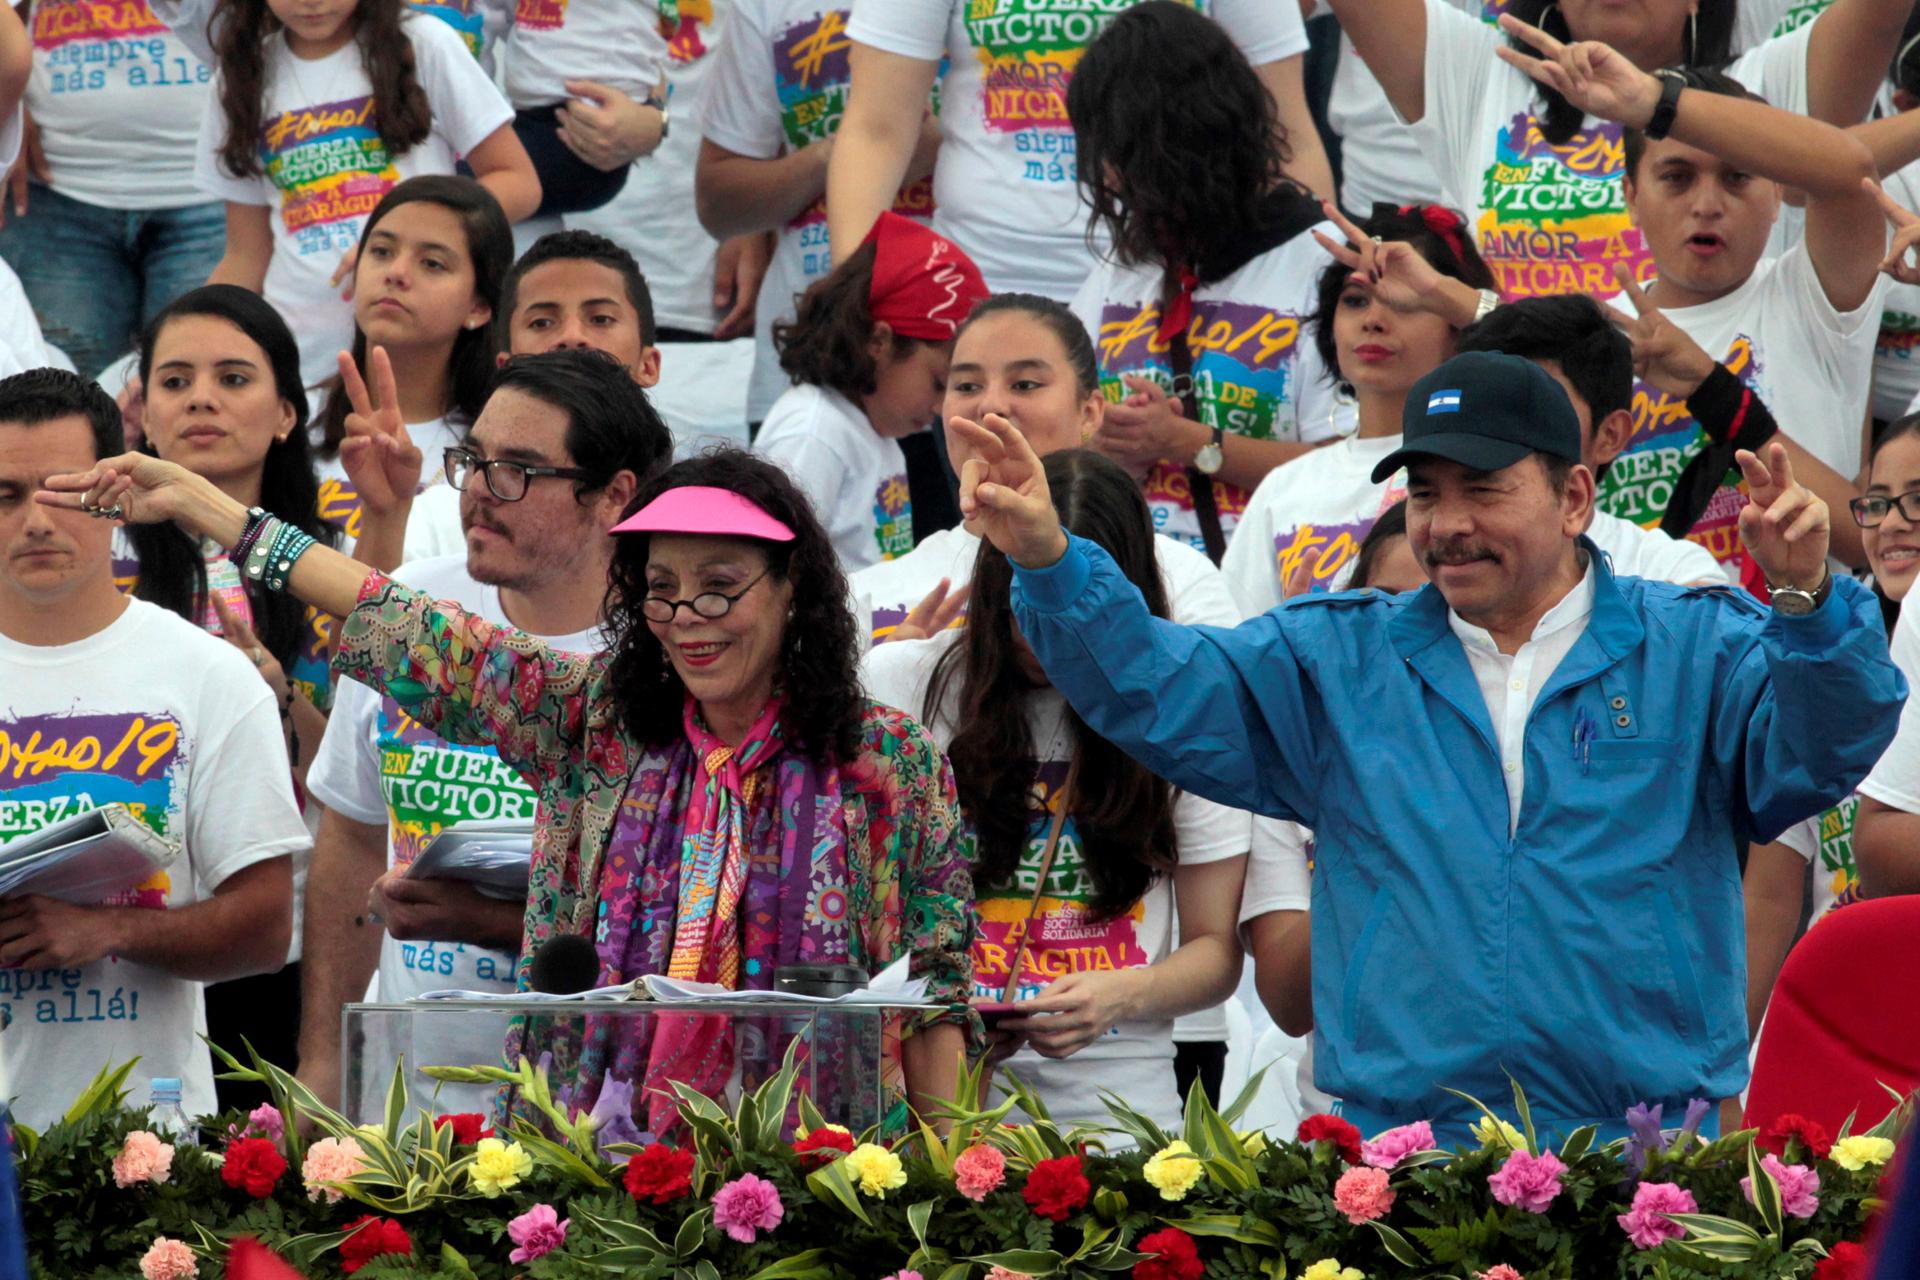 Nicaragua's President Daniel Ortega and first lady Rosario Murillo